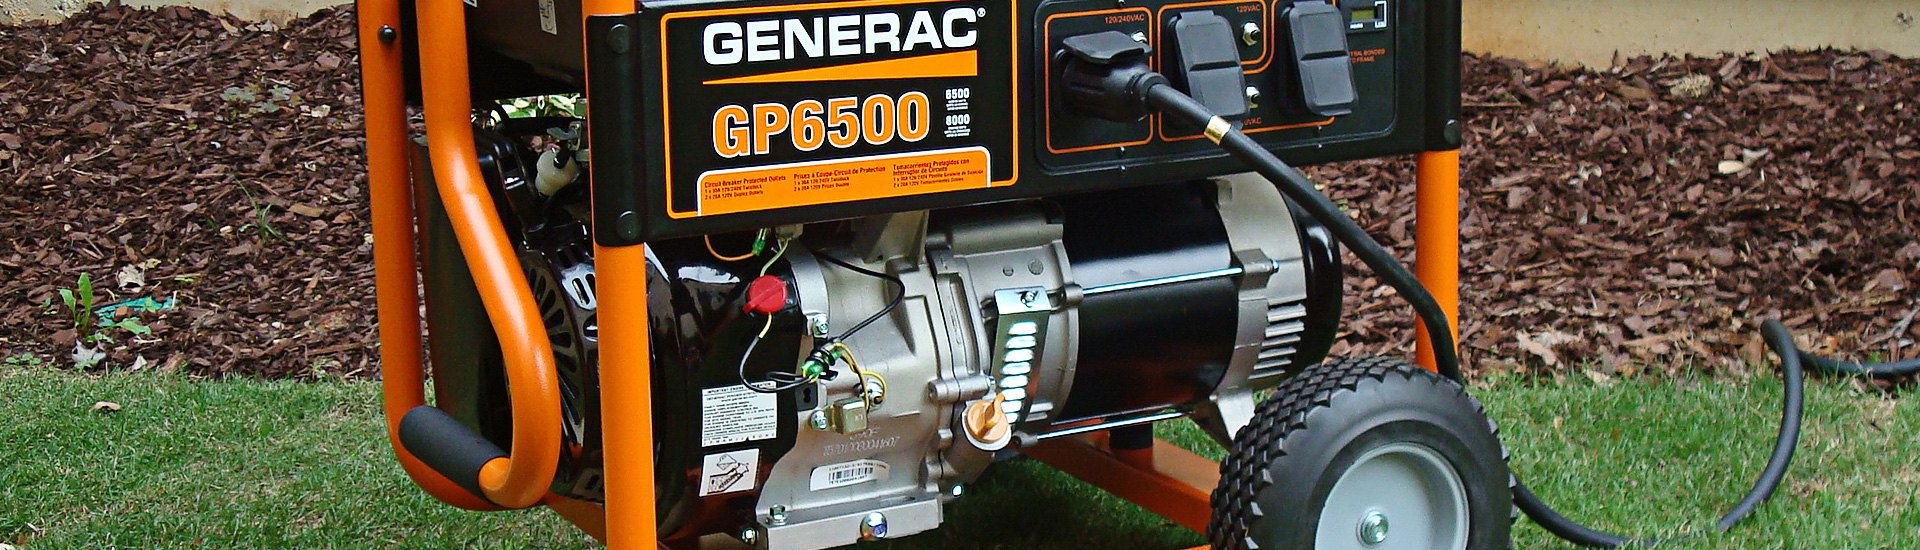 household generators